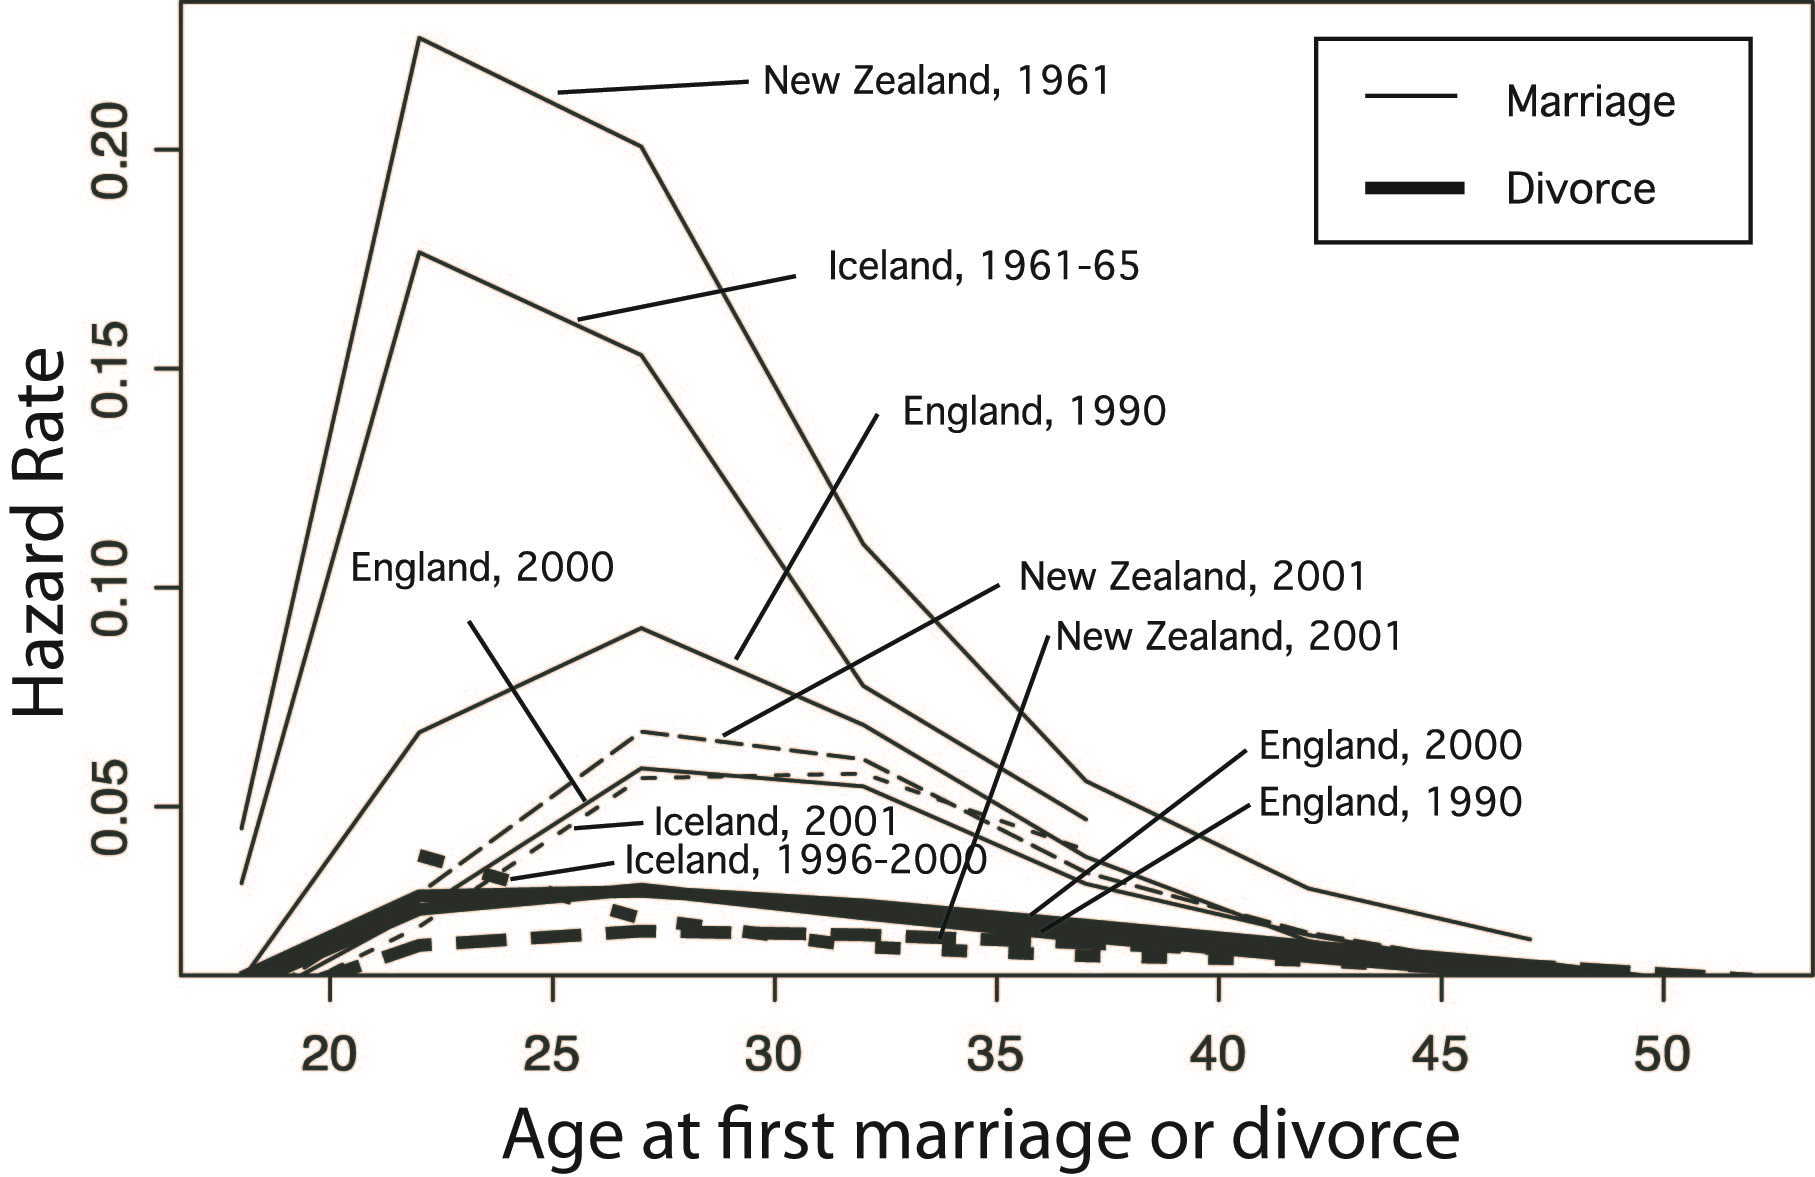 An analysis of divorce